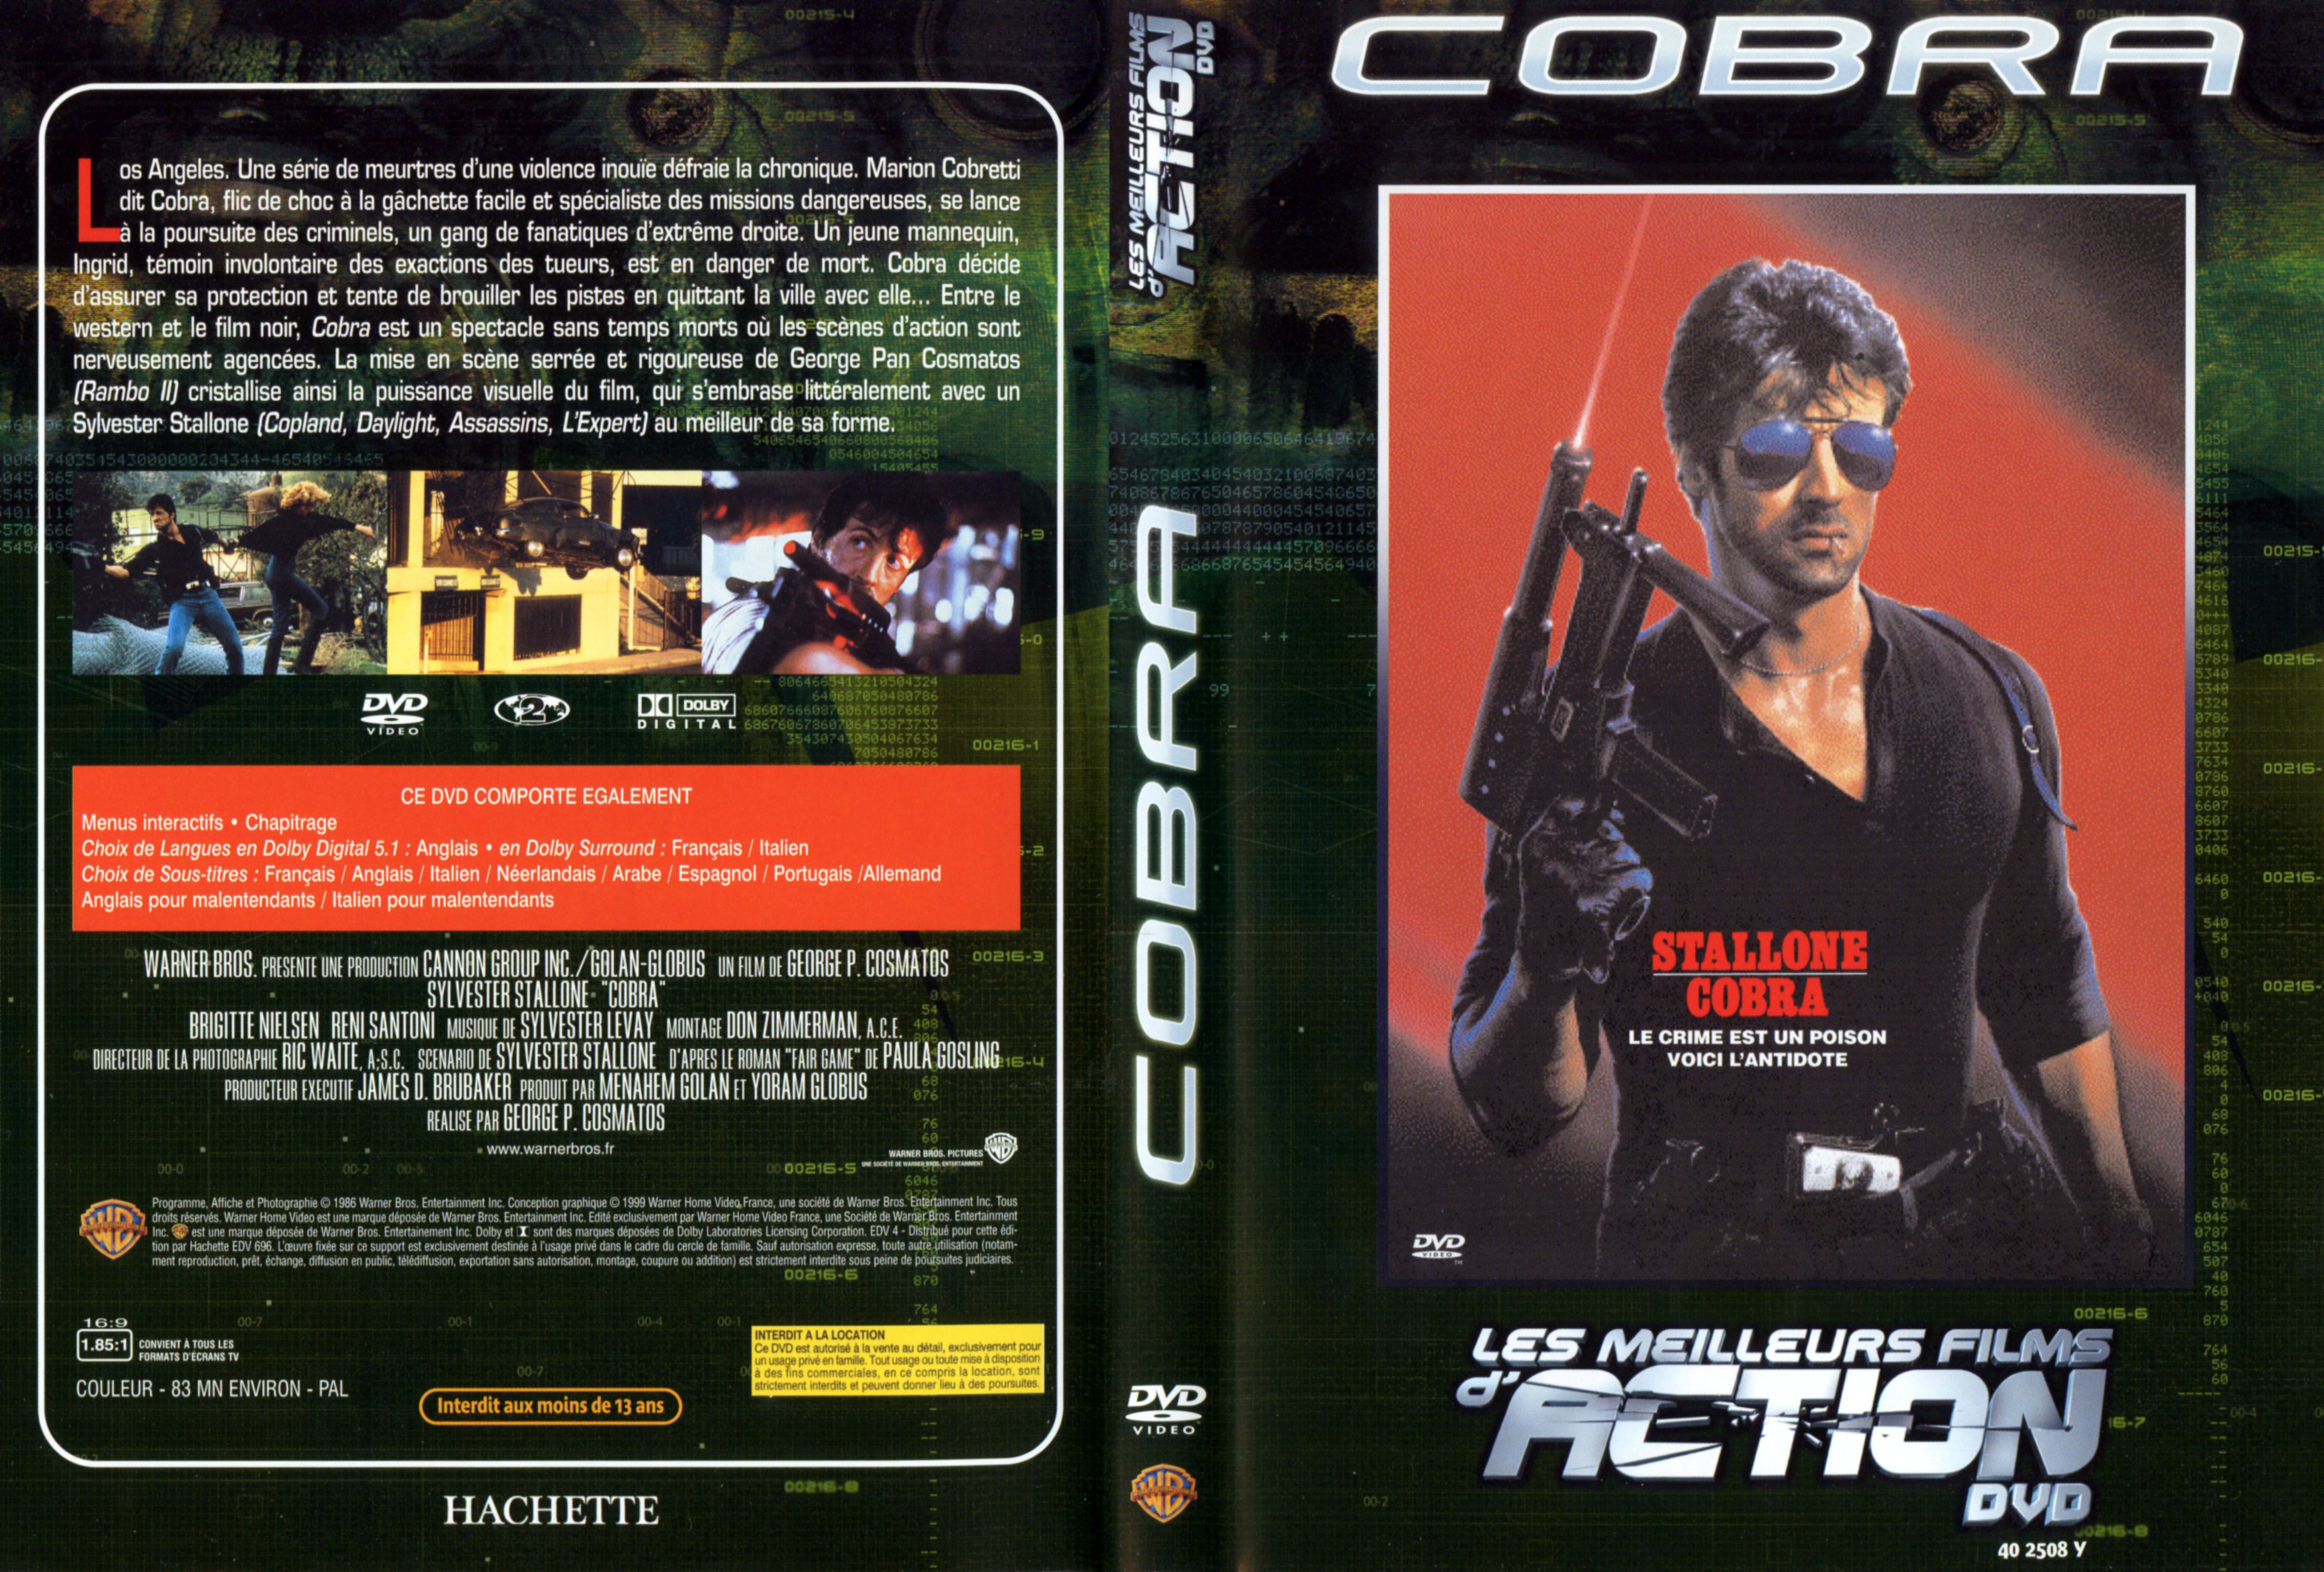 Jaquette DVD Cobra v2